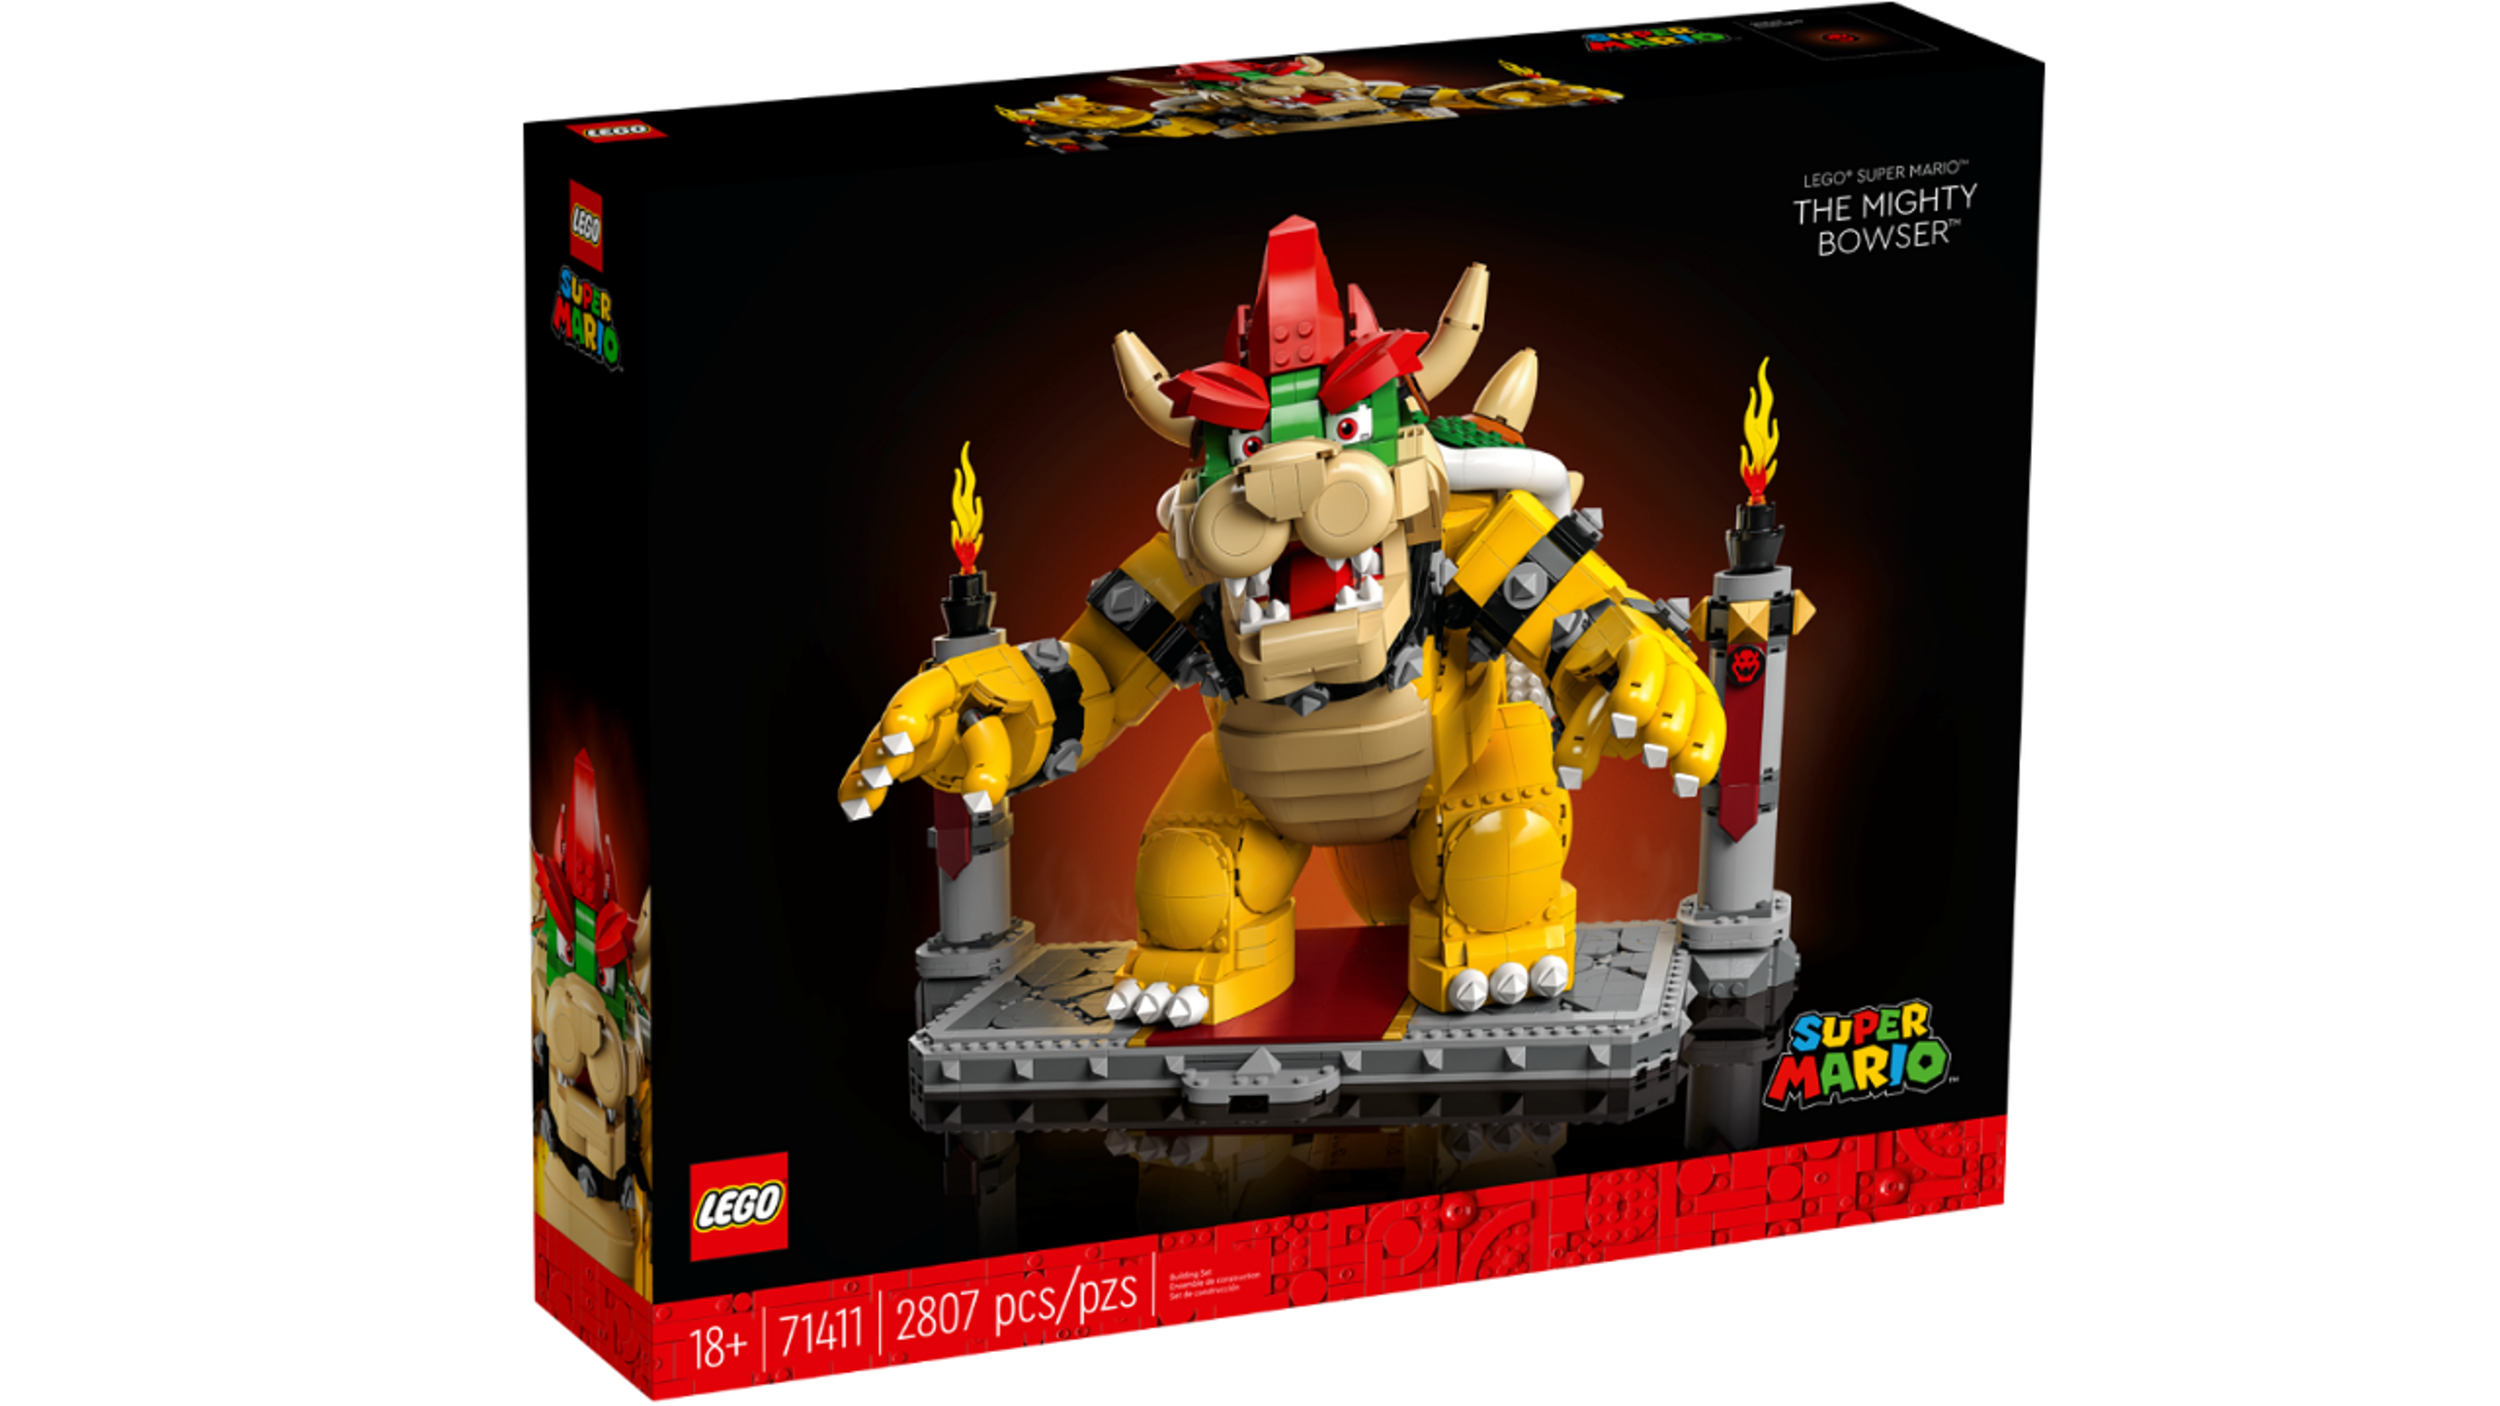 Caja del espectacular set de 'LEGO Mario' con Bowser de protagonista